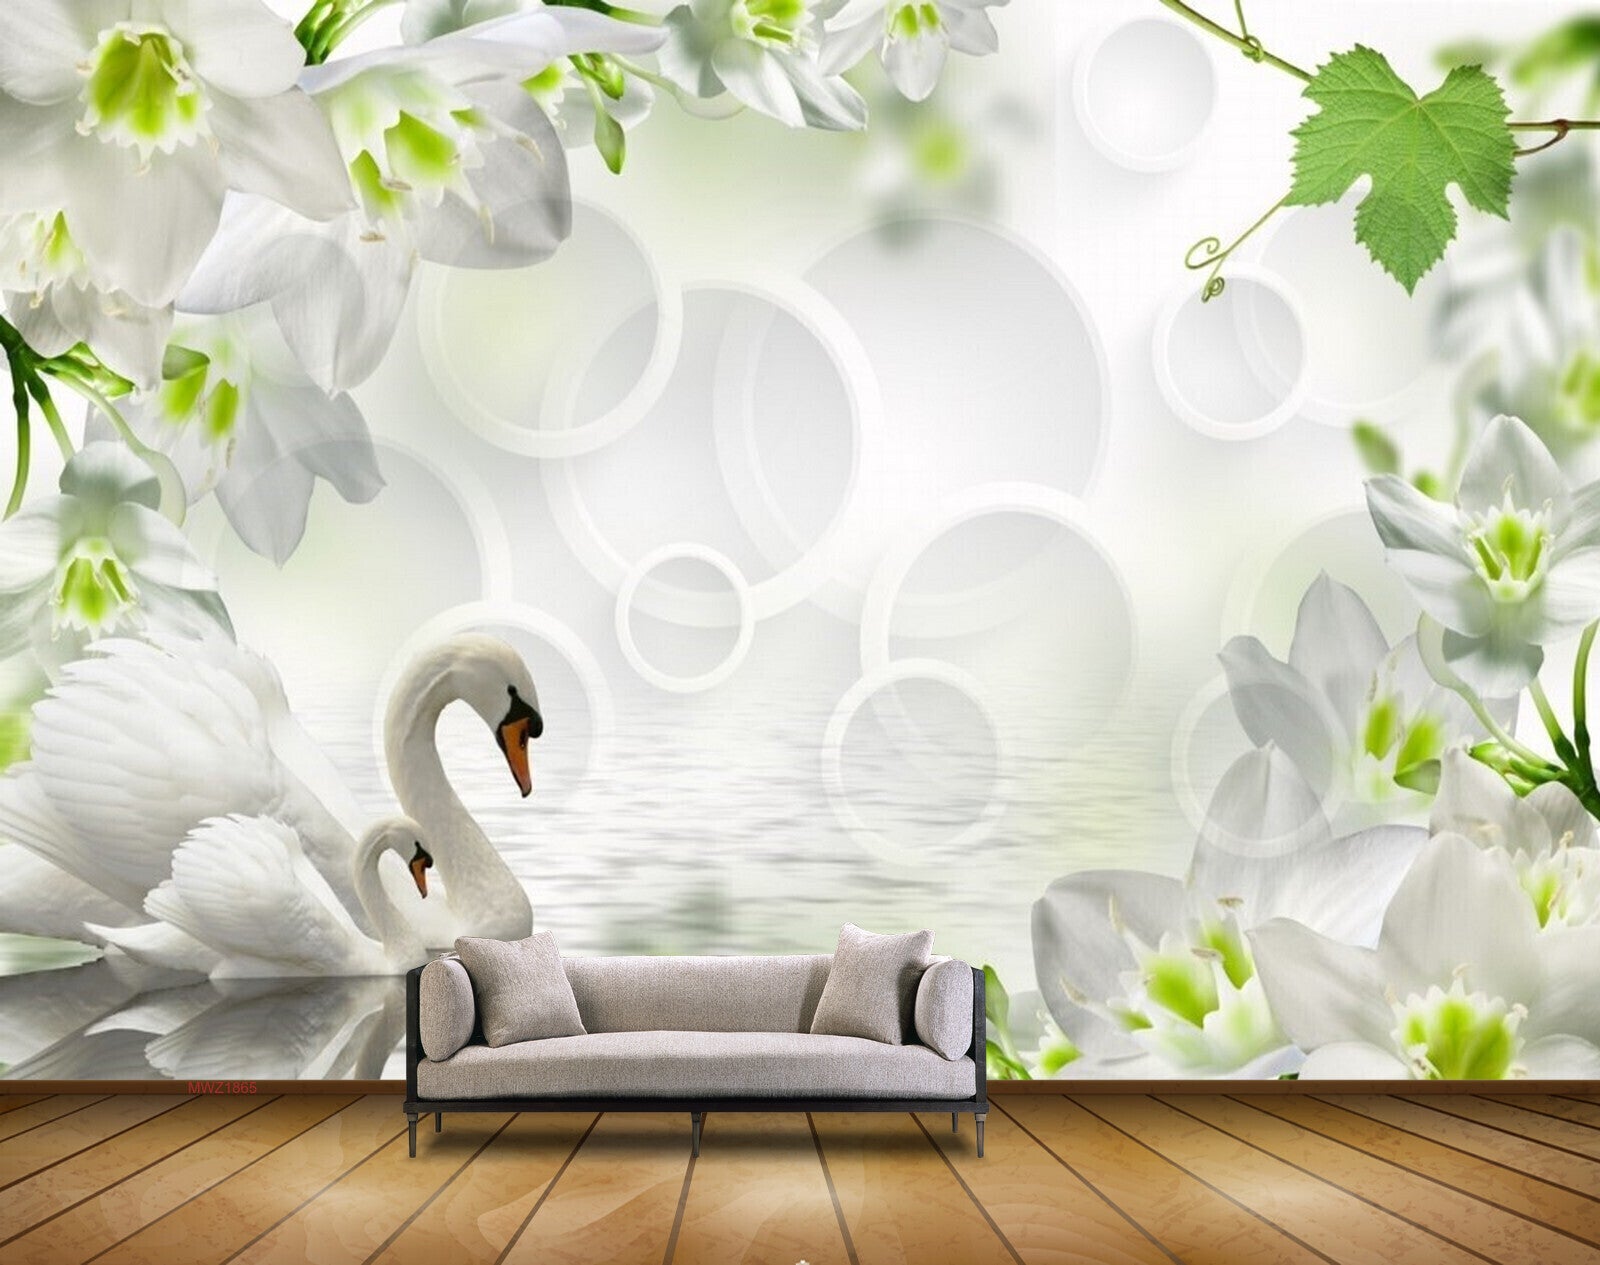 10000 Free Swan  Nature Images  Pixabay